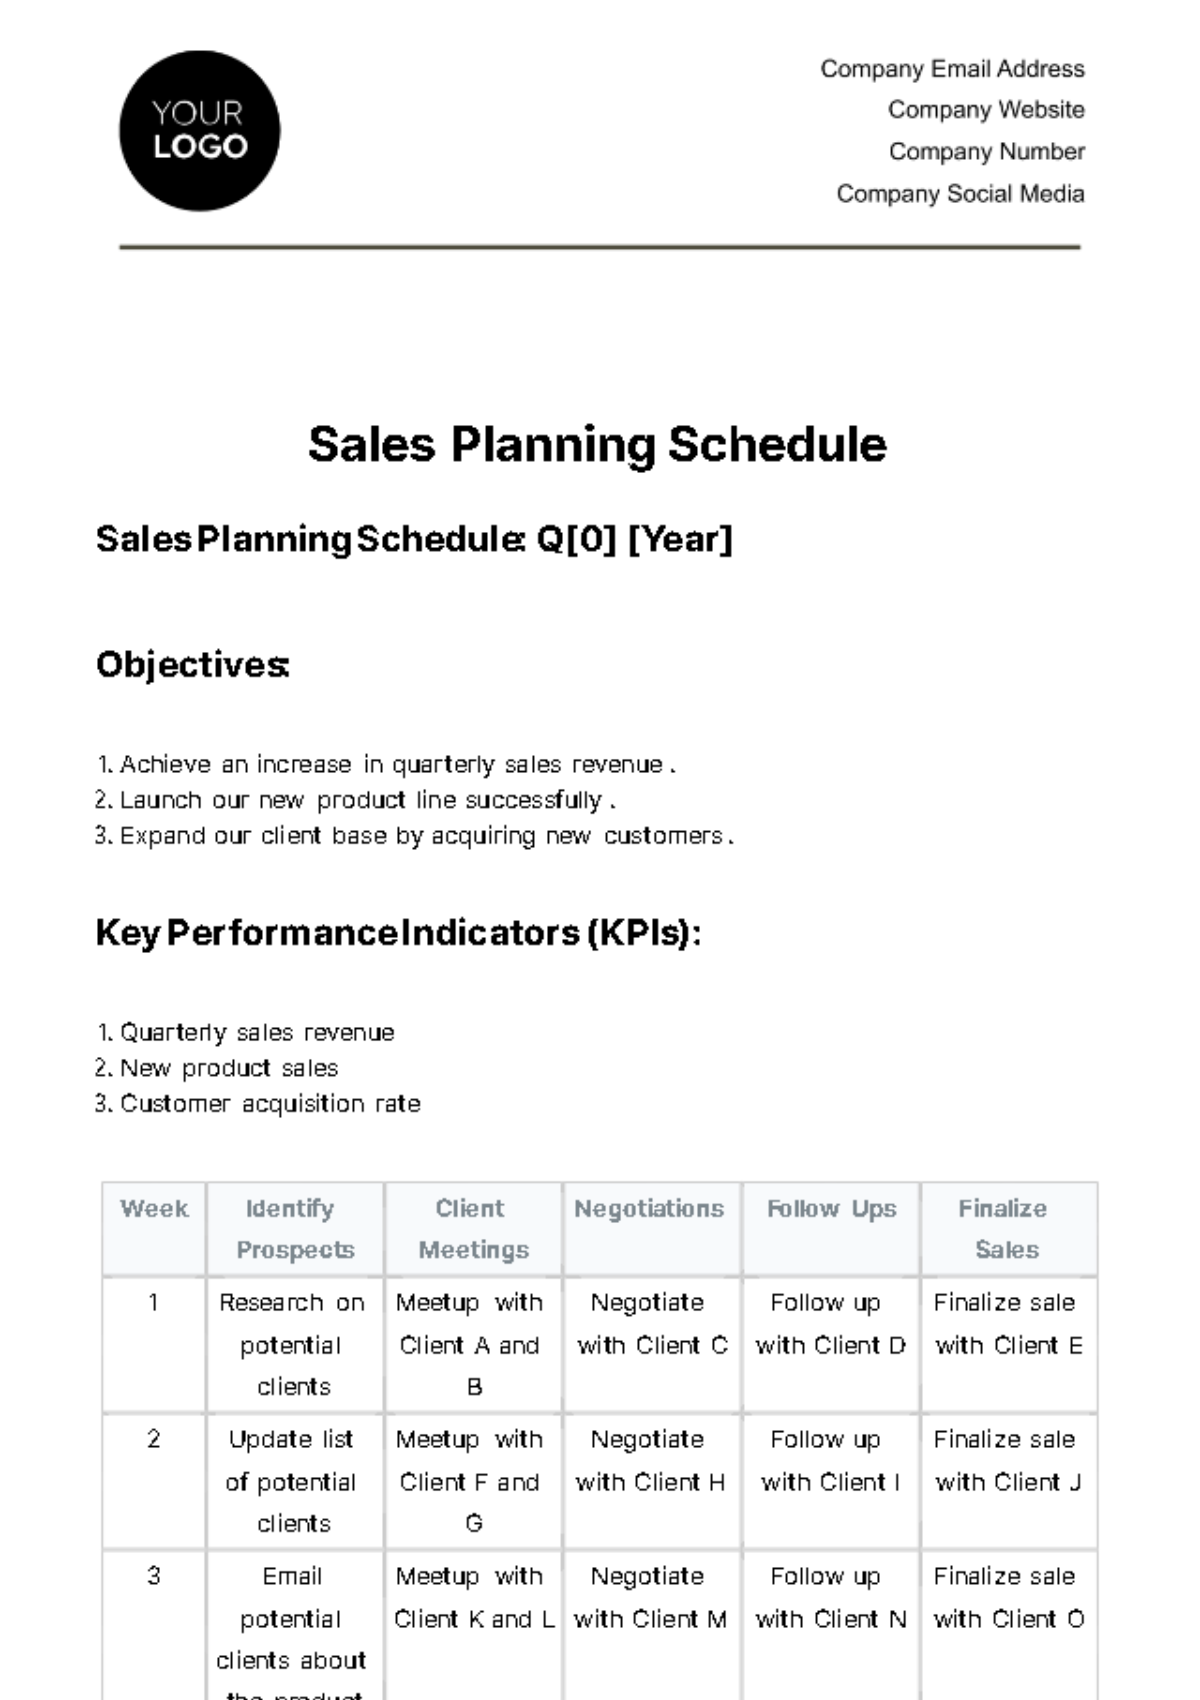 Sales Planning Schedule Template